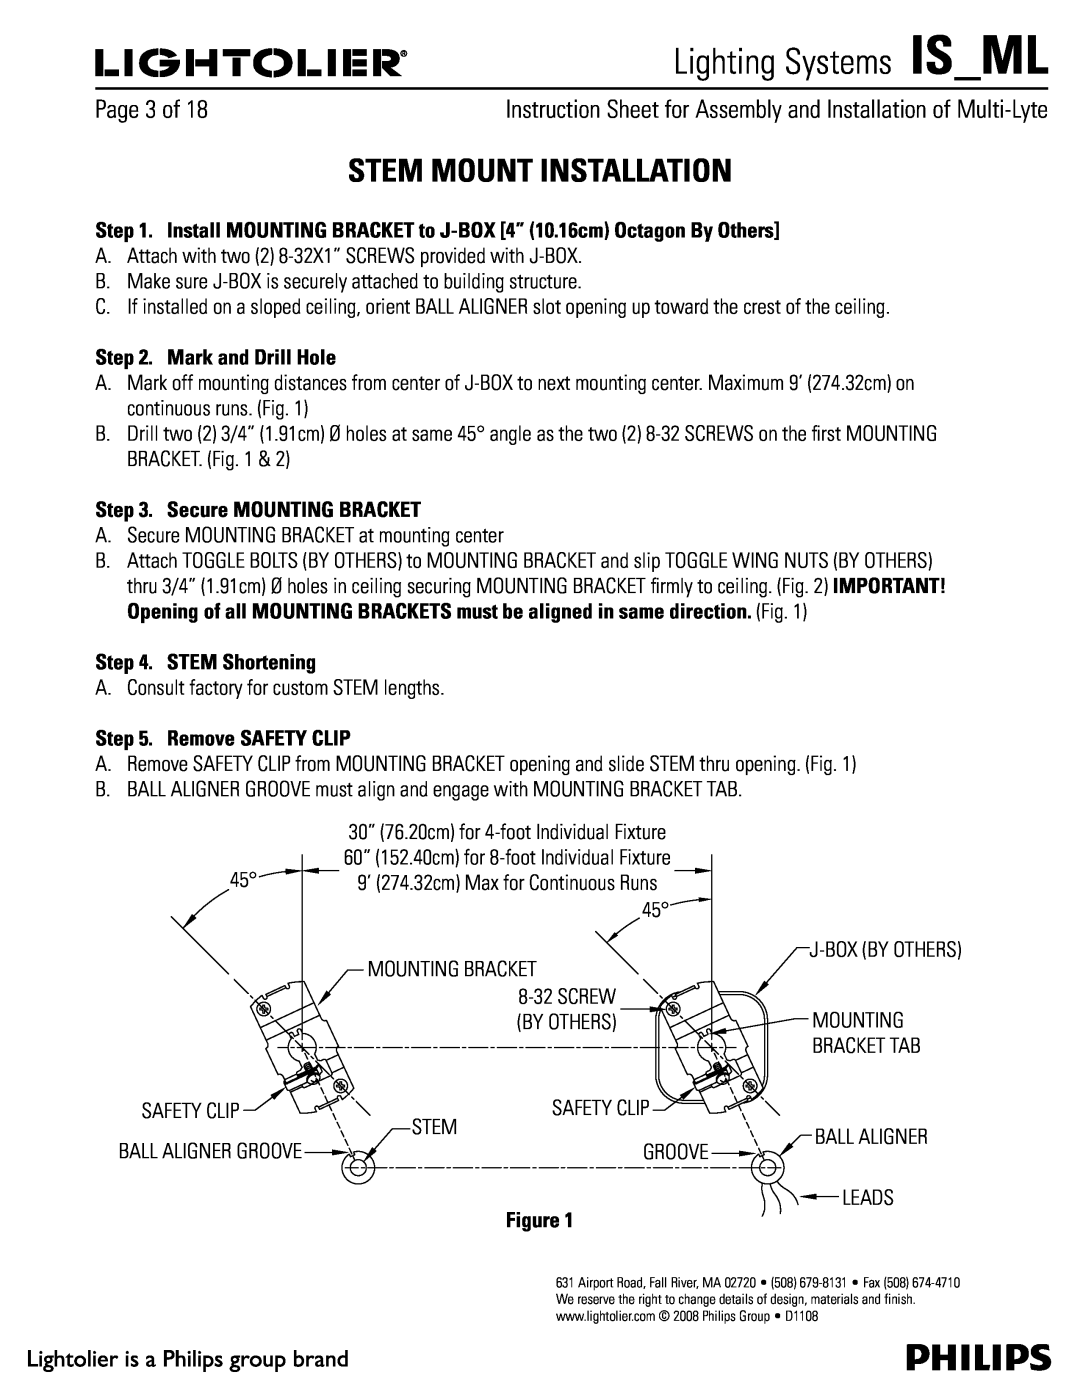 Lightolier ML manual Stem Mount Installation, 1BHFPG, Mark and Drill Hole, Secure MOUNTING BRACKET, STEM Shortening 